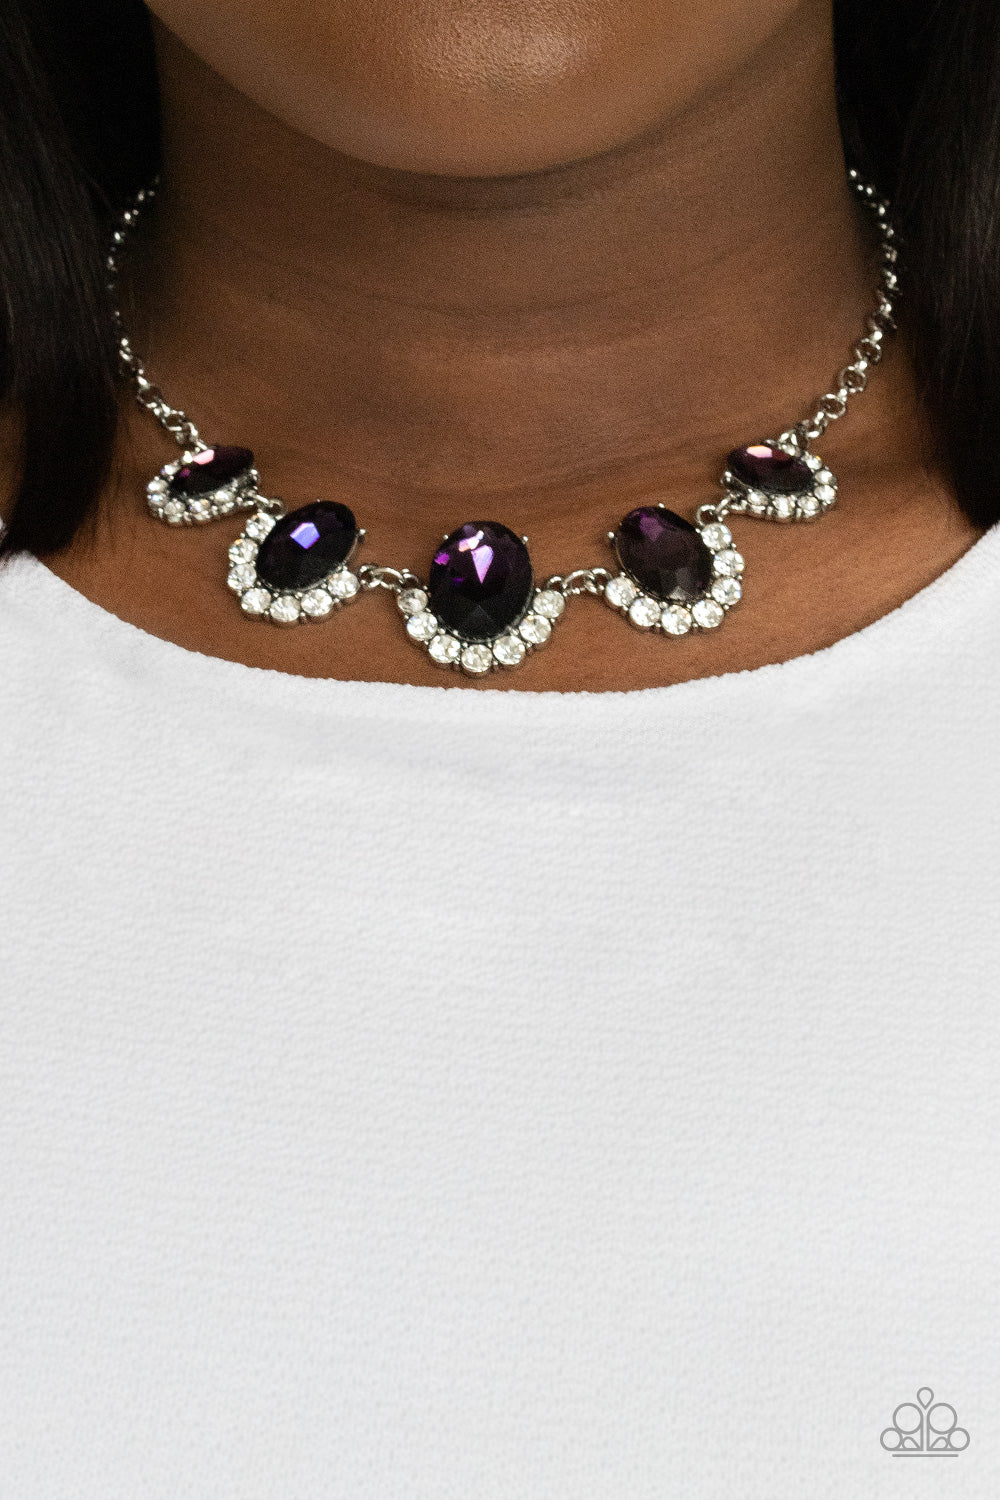 Paparazzi Accessories - The Queen Demands It #N642 - Purple Necklace